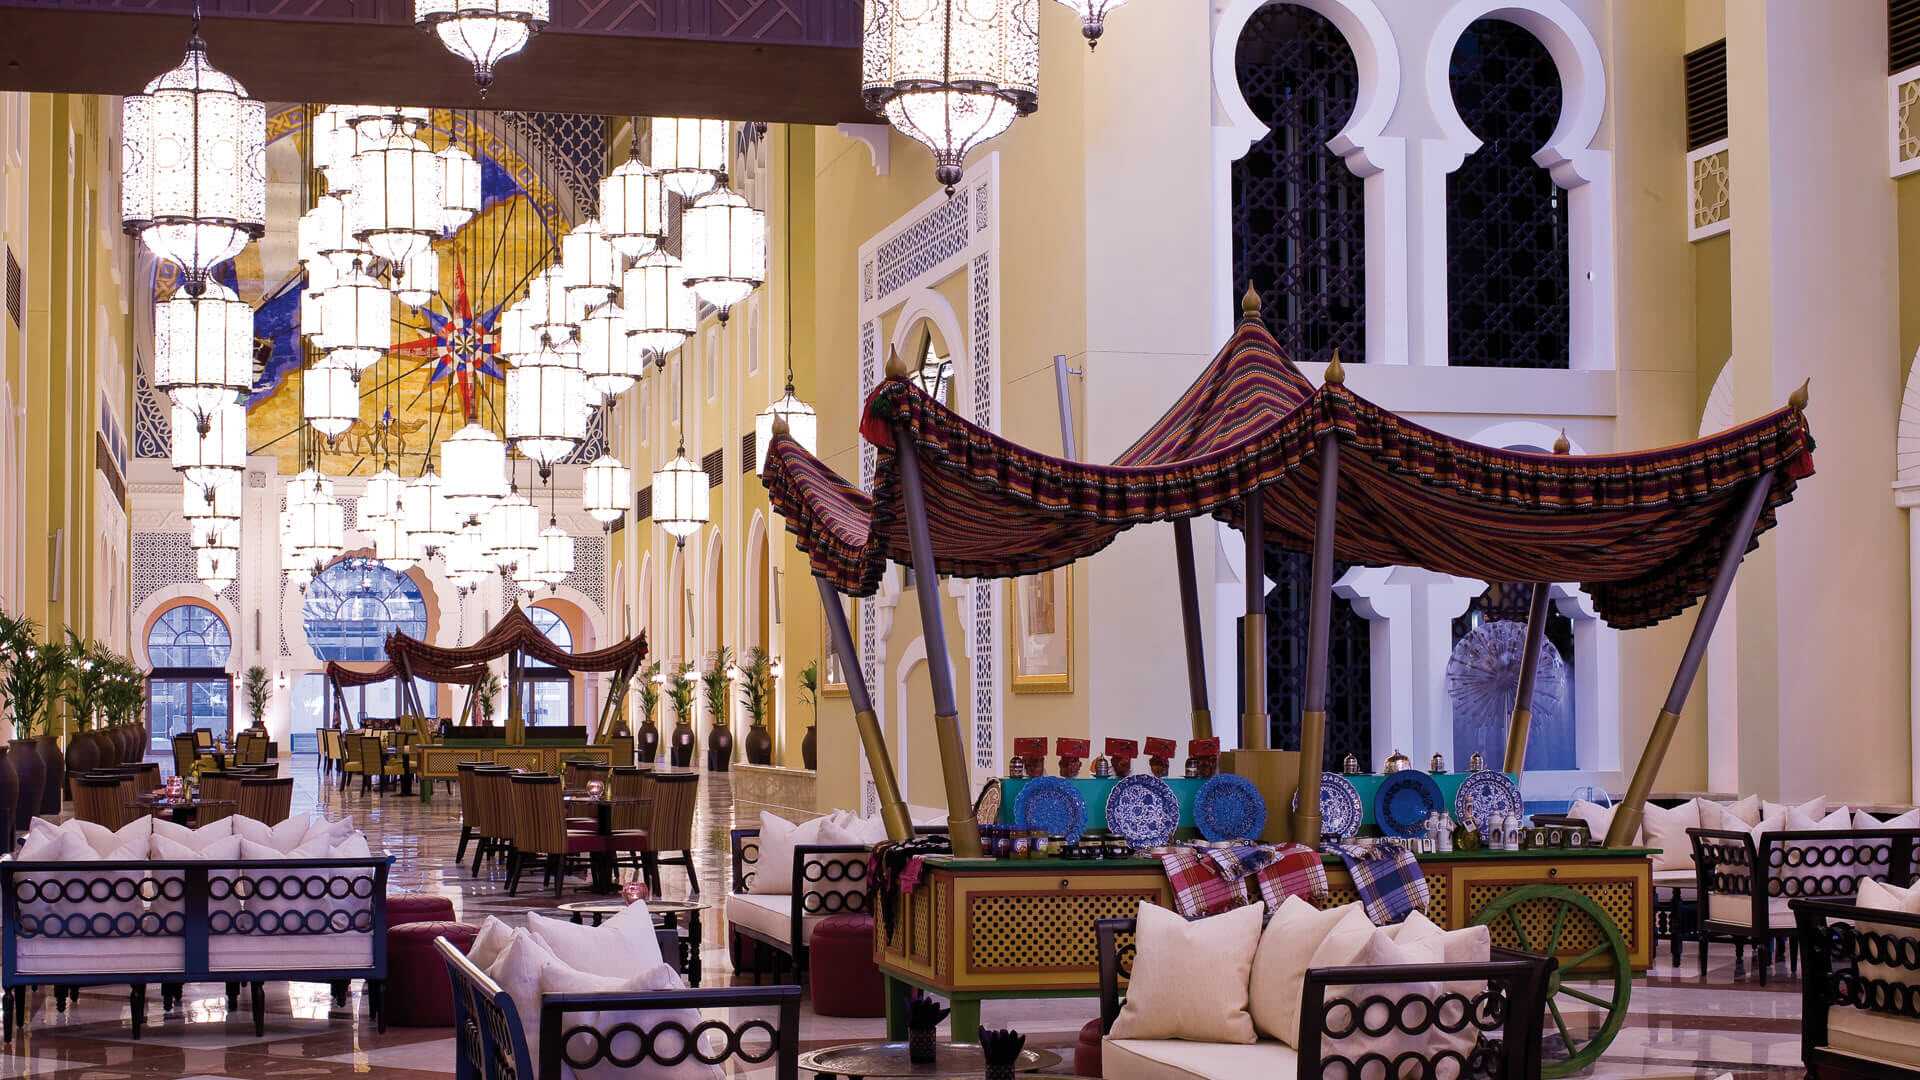 Oaks IBN Battuta Gate Hotel Dubai? Inside Hotel